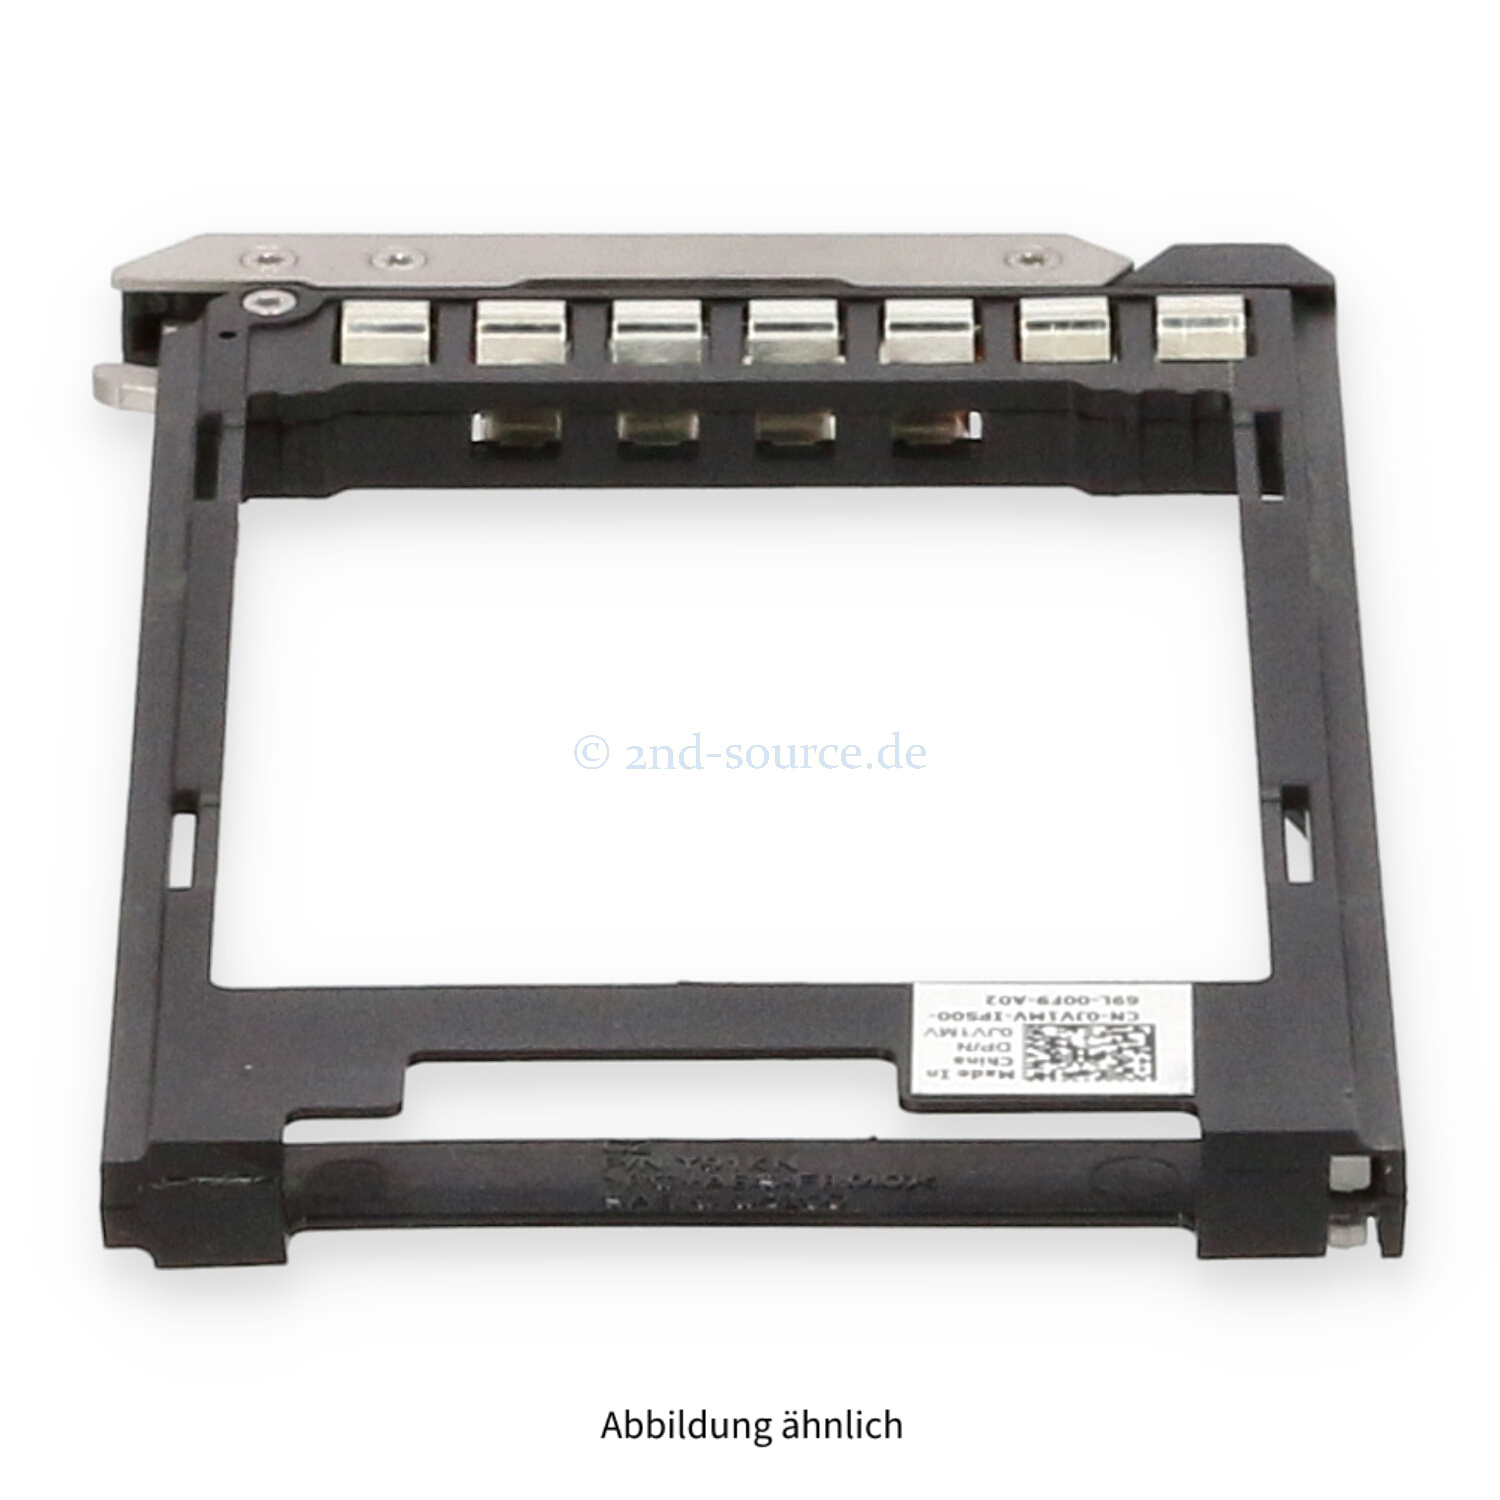 Dell 1.8'' Micro SAS SATA HotPlug HDD Tray Caddy Festplattenrahmen PowerEdge G13 JV1MV 0JV1MV